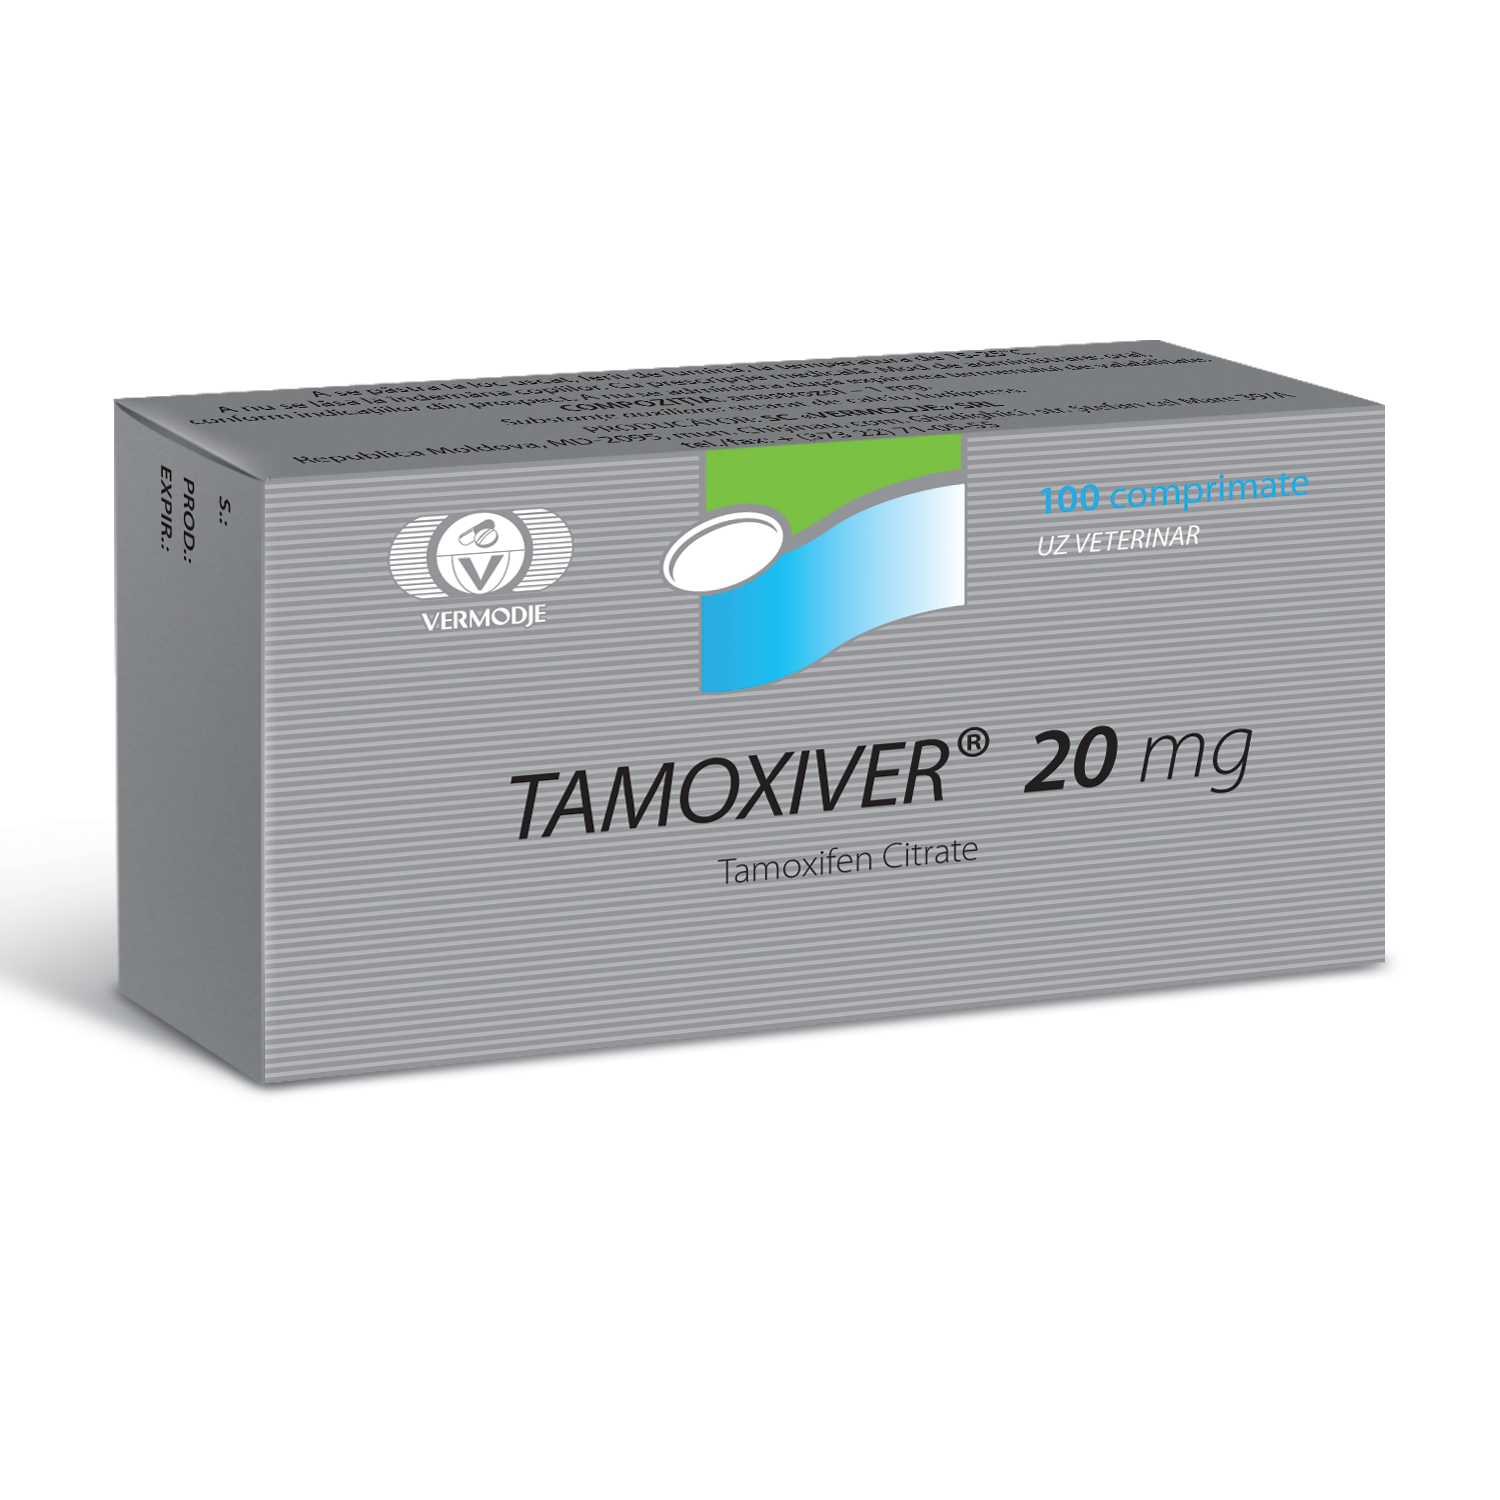 Tamoxiver (tamoxifen citrate)